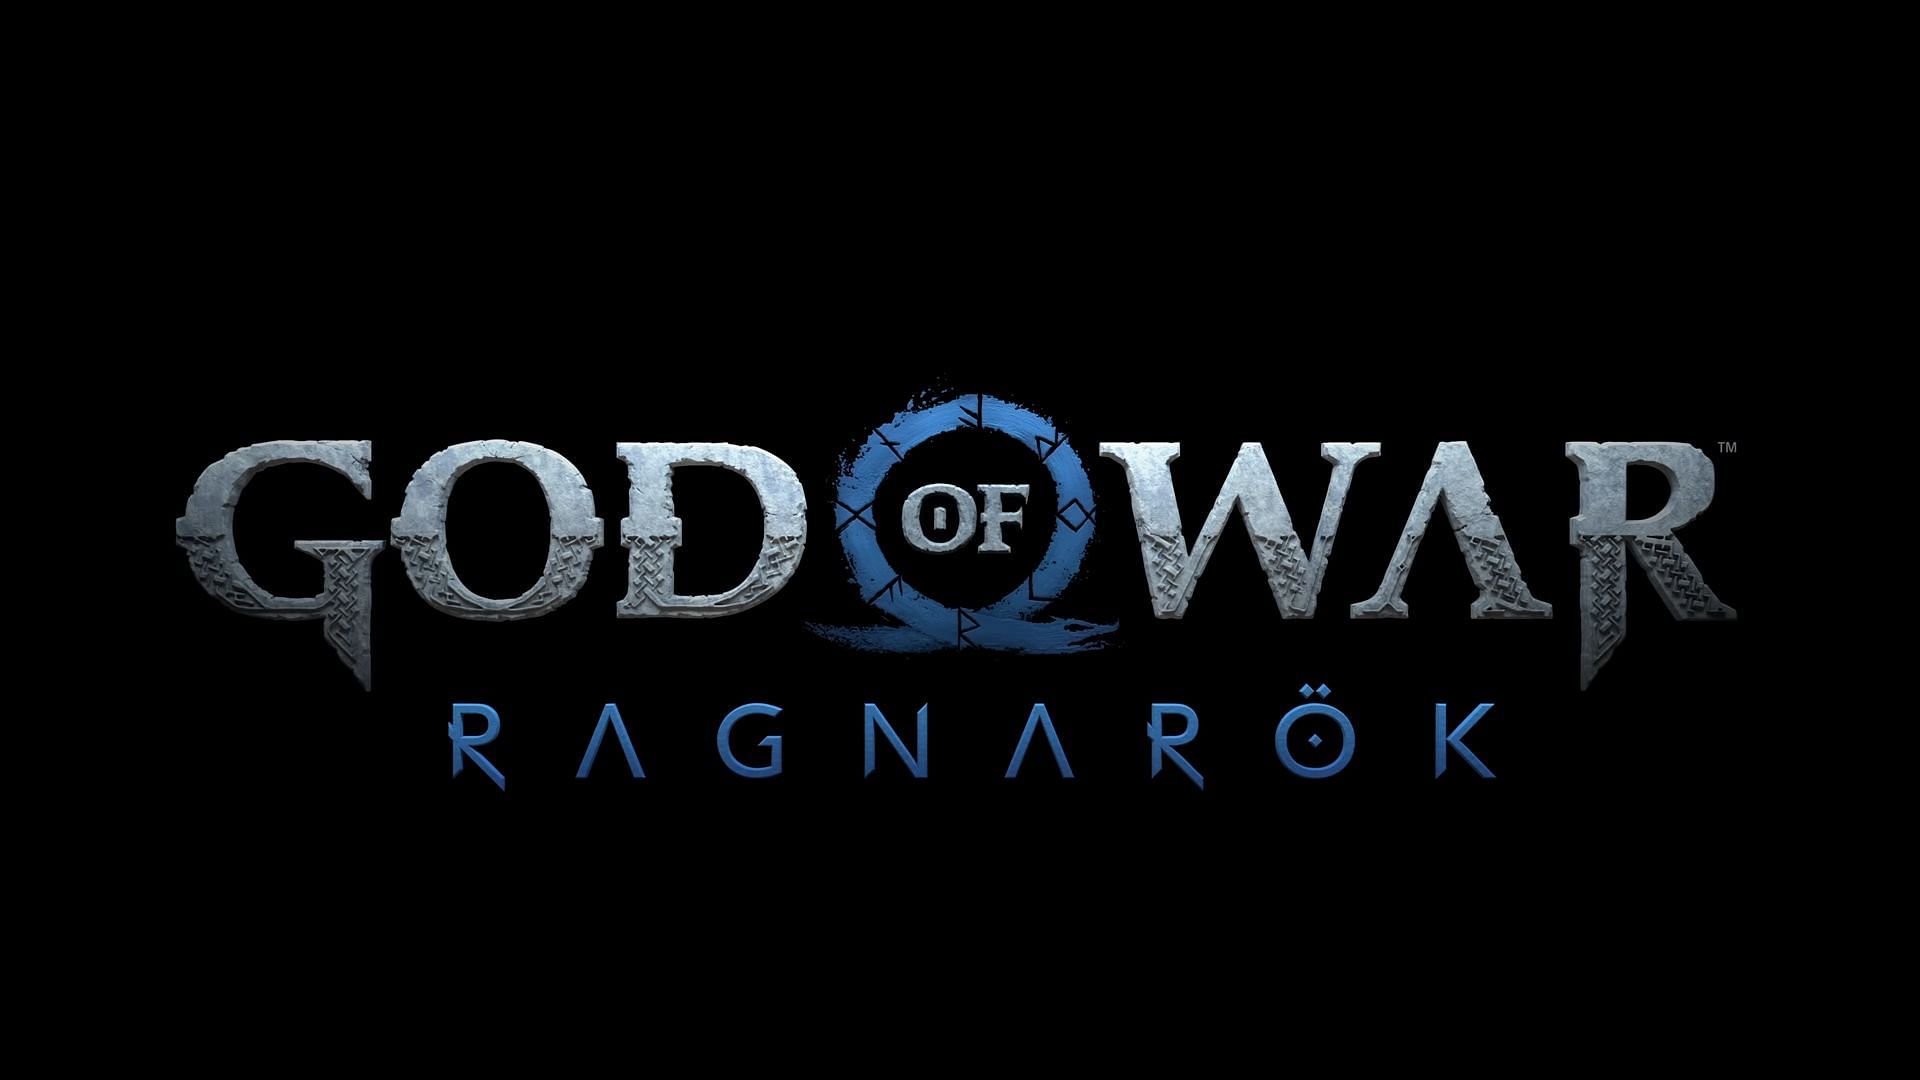 Ragnarok is coming (Image via Sony)